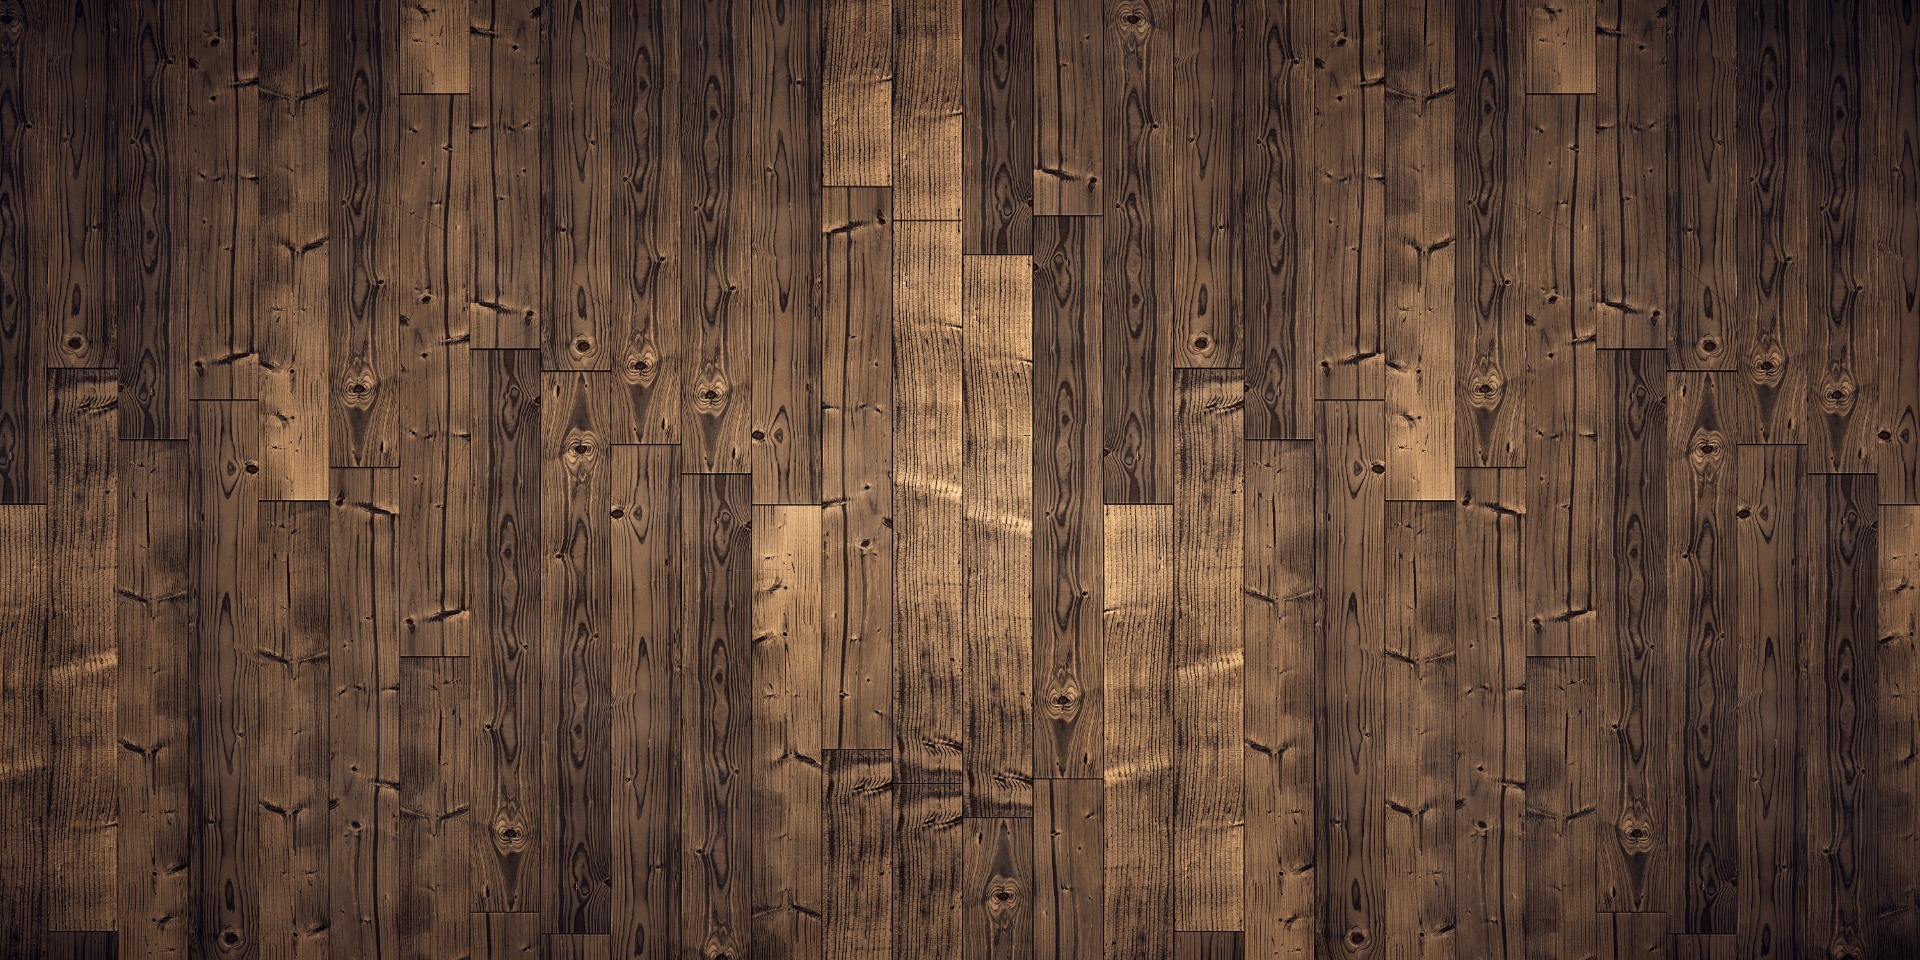 Rustic Wood Images  Free Download on Freepik